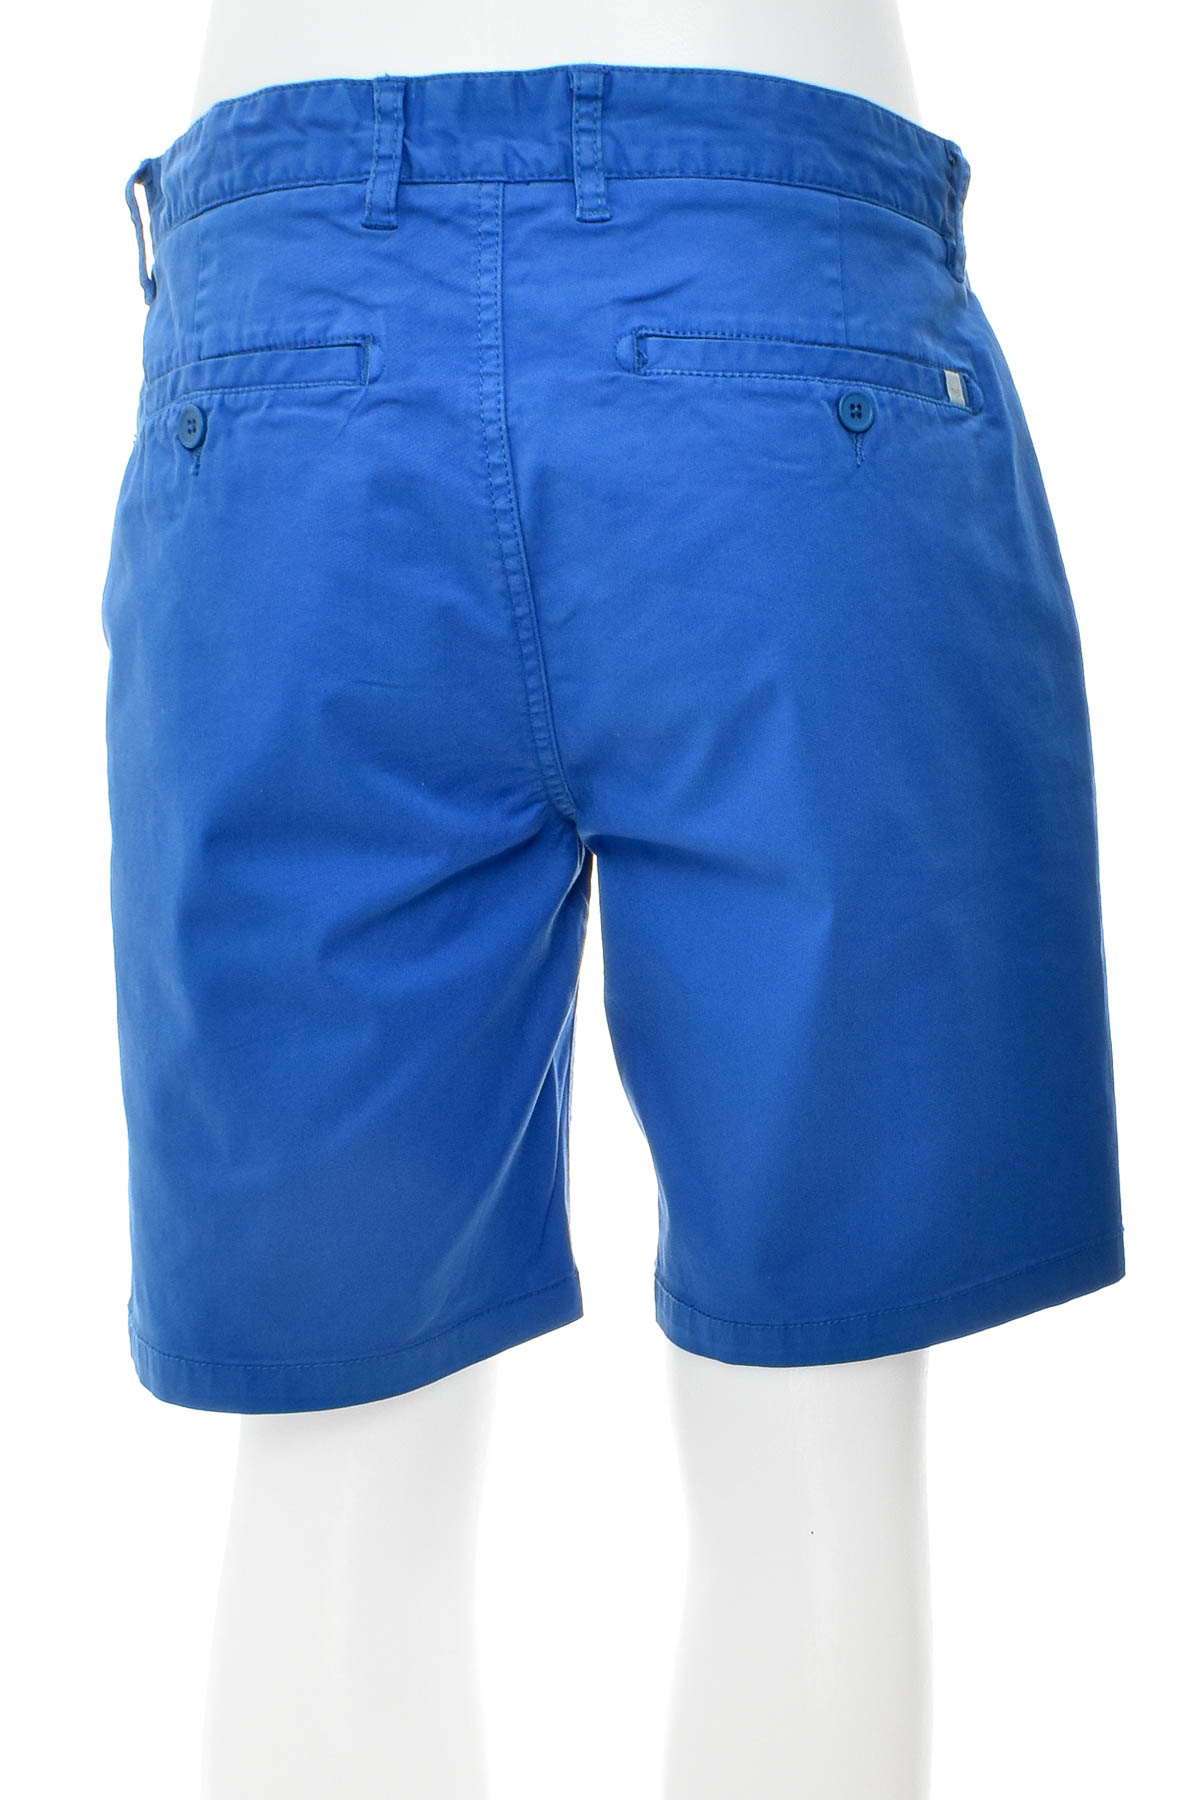 Men's shorts - Minimum - 1